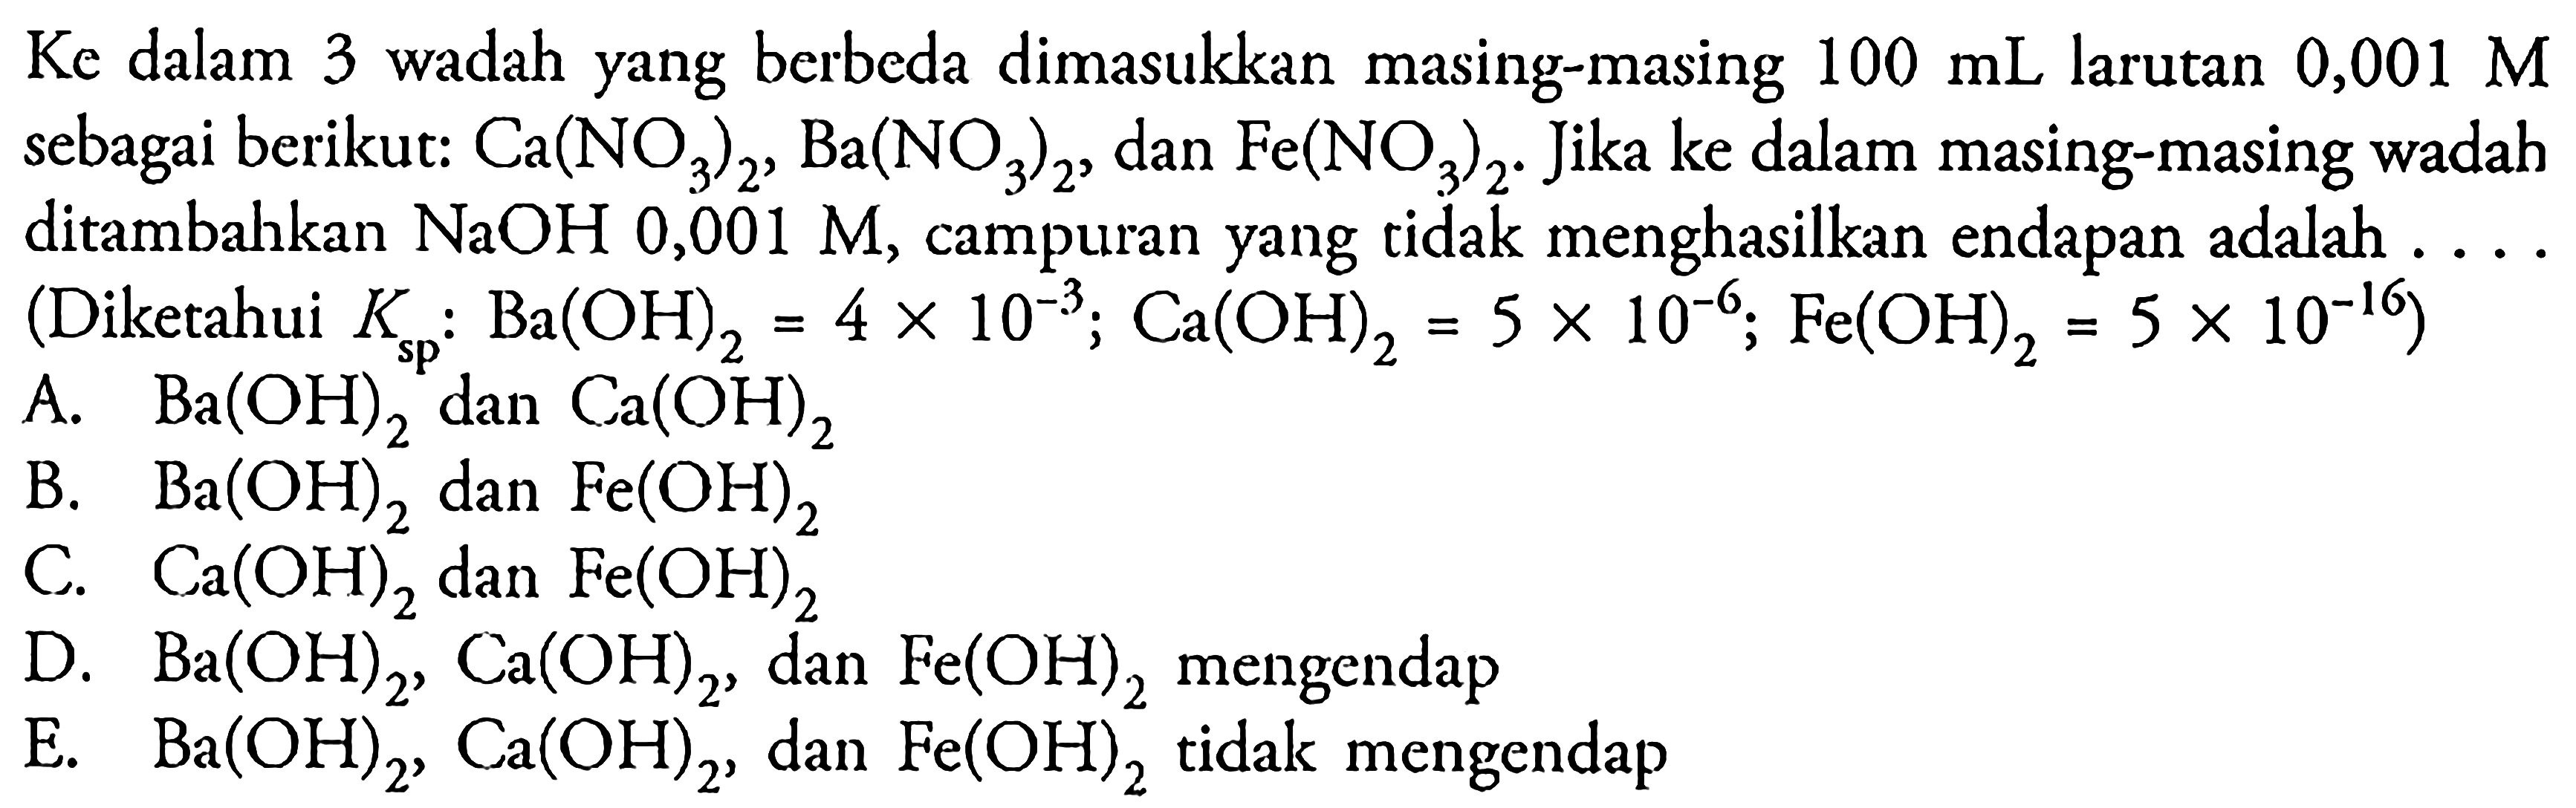 Ke dalam 3 wadah yang berbeda dimasukkan masing-masing  100 mL  larutan  0,001 M  sebagai berikut: Ca(NO3)2, Ba(NO3)2, dan Fe(NO3)2. Jika ke dalam masing-masing wadah ditambahkan  NaOH 0,001 M, campuran yang tidak menghasilkan endapan adalah .... (Diketahui Ksp: Ba(OH)2=4 x 10^(-3); Ca(OH)2=5 x 10^(-6); Fe(OH)2=5 x 10^(-16)) 